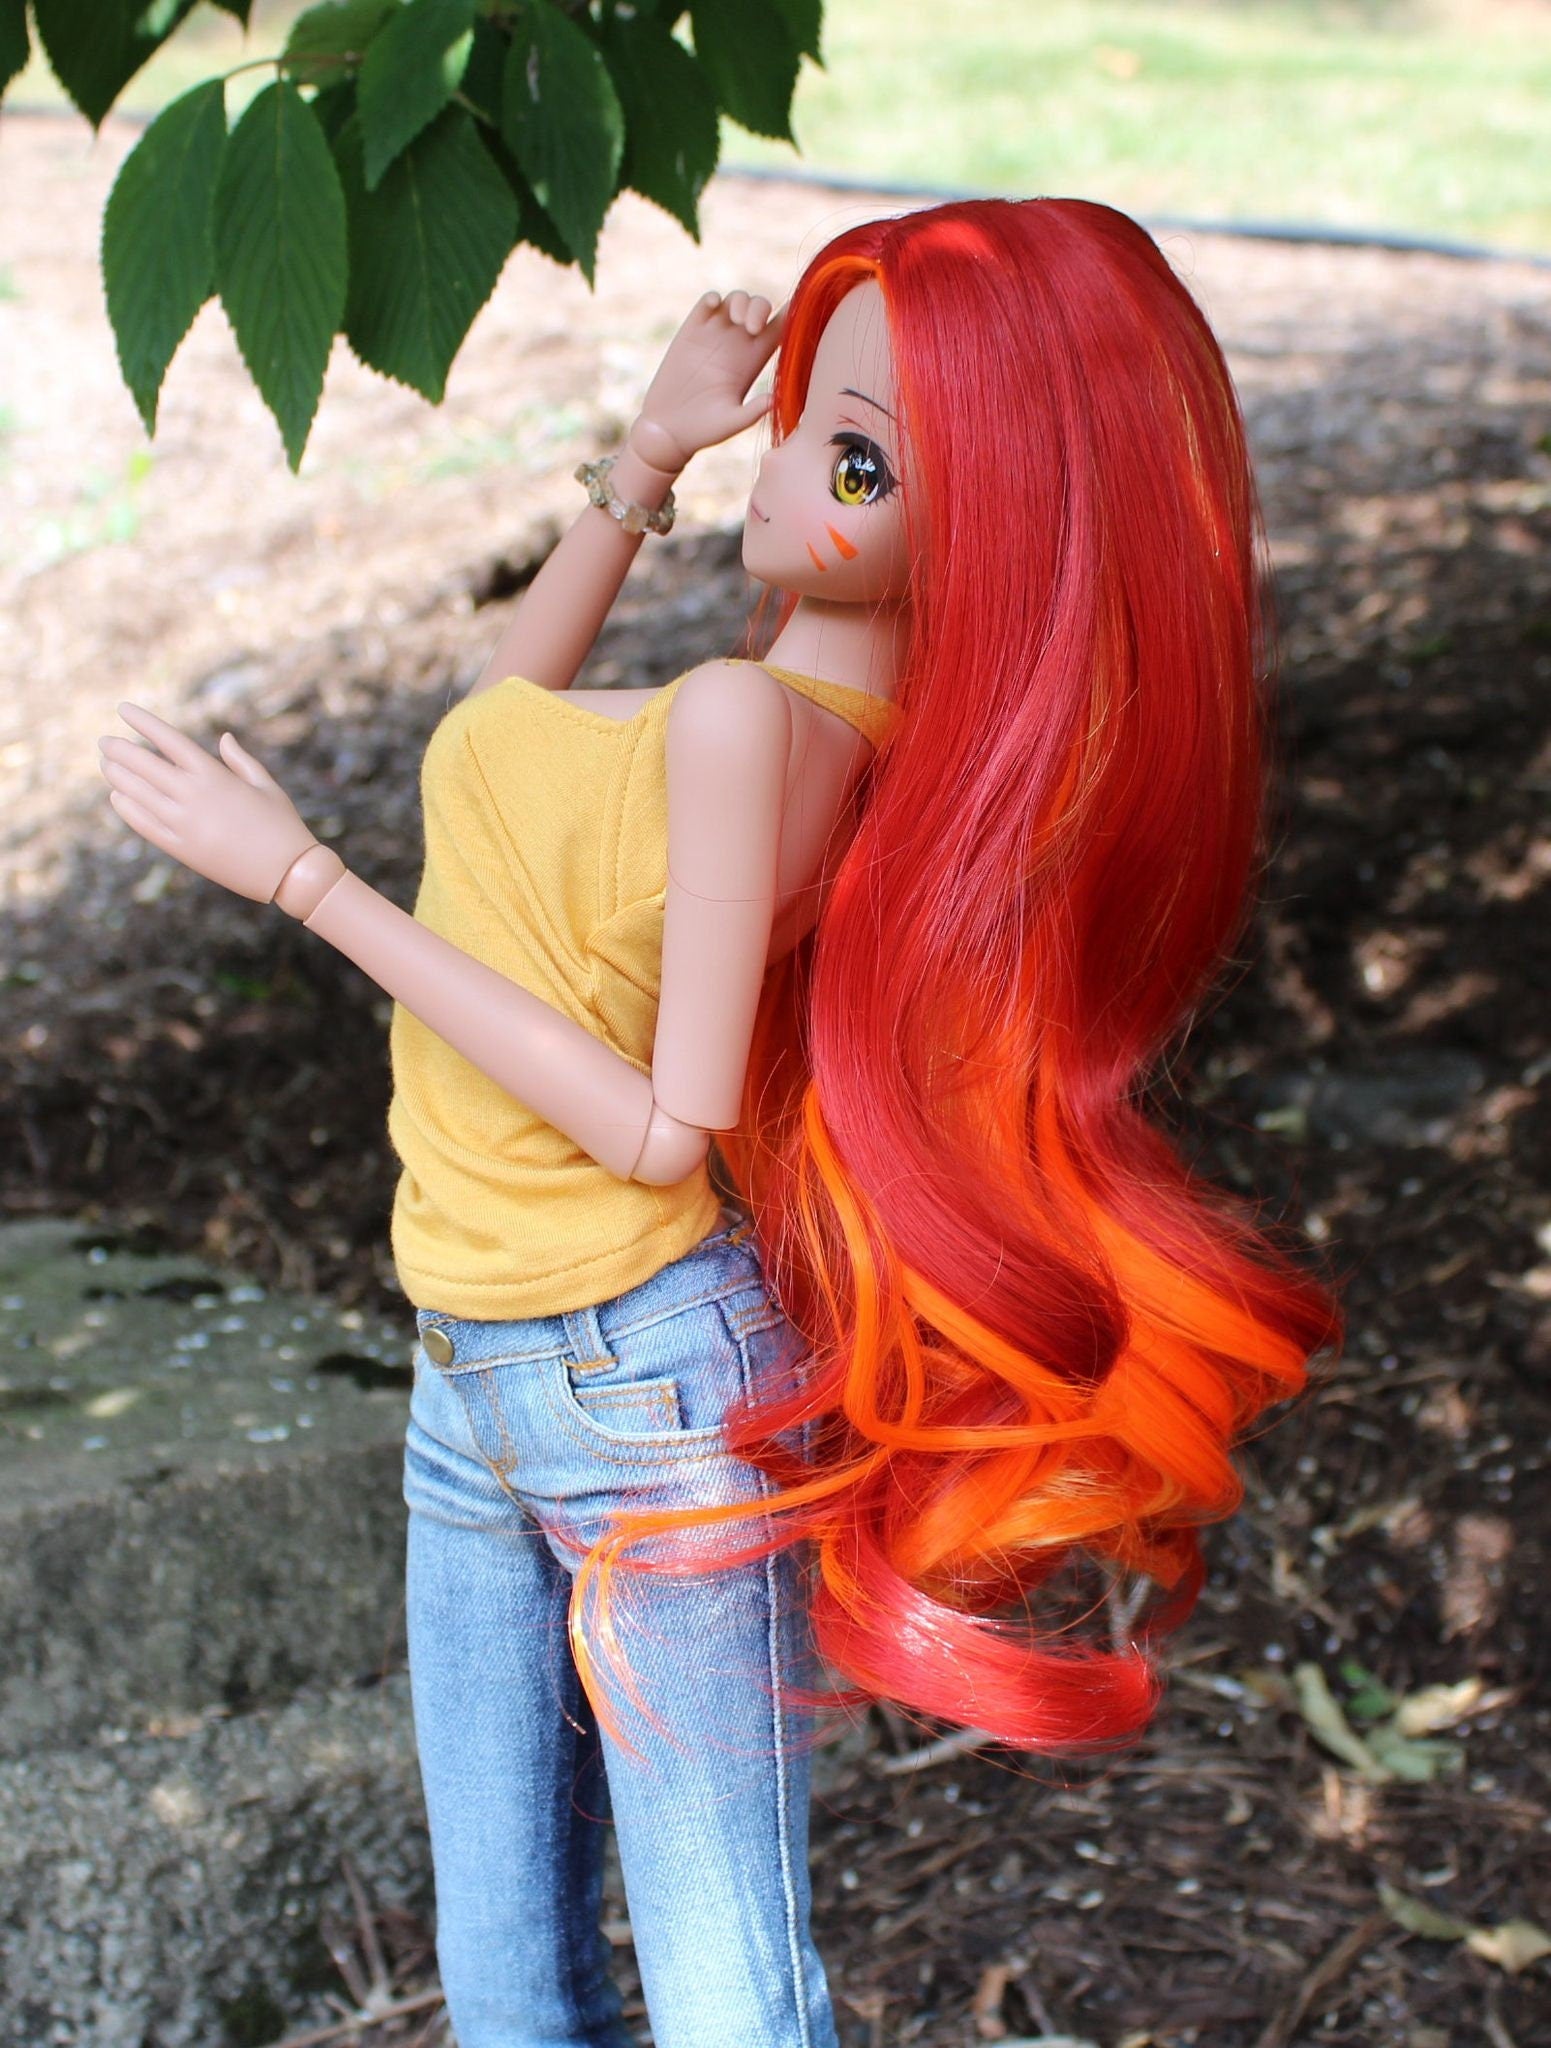 Custom doll Wig for Smart Dolls- Heat Safe - Tangle Resistant- 8.5" head size of Bjd, SD, Dollfie Dream dolls Fire